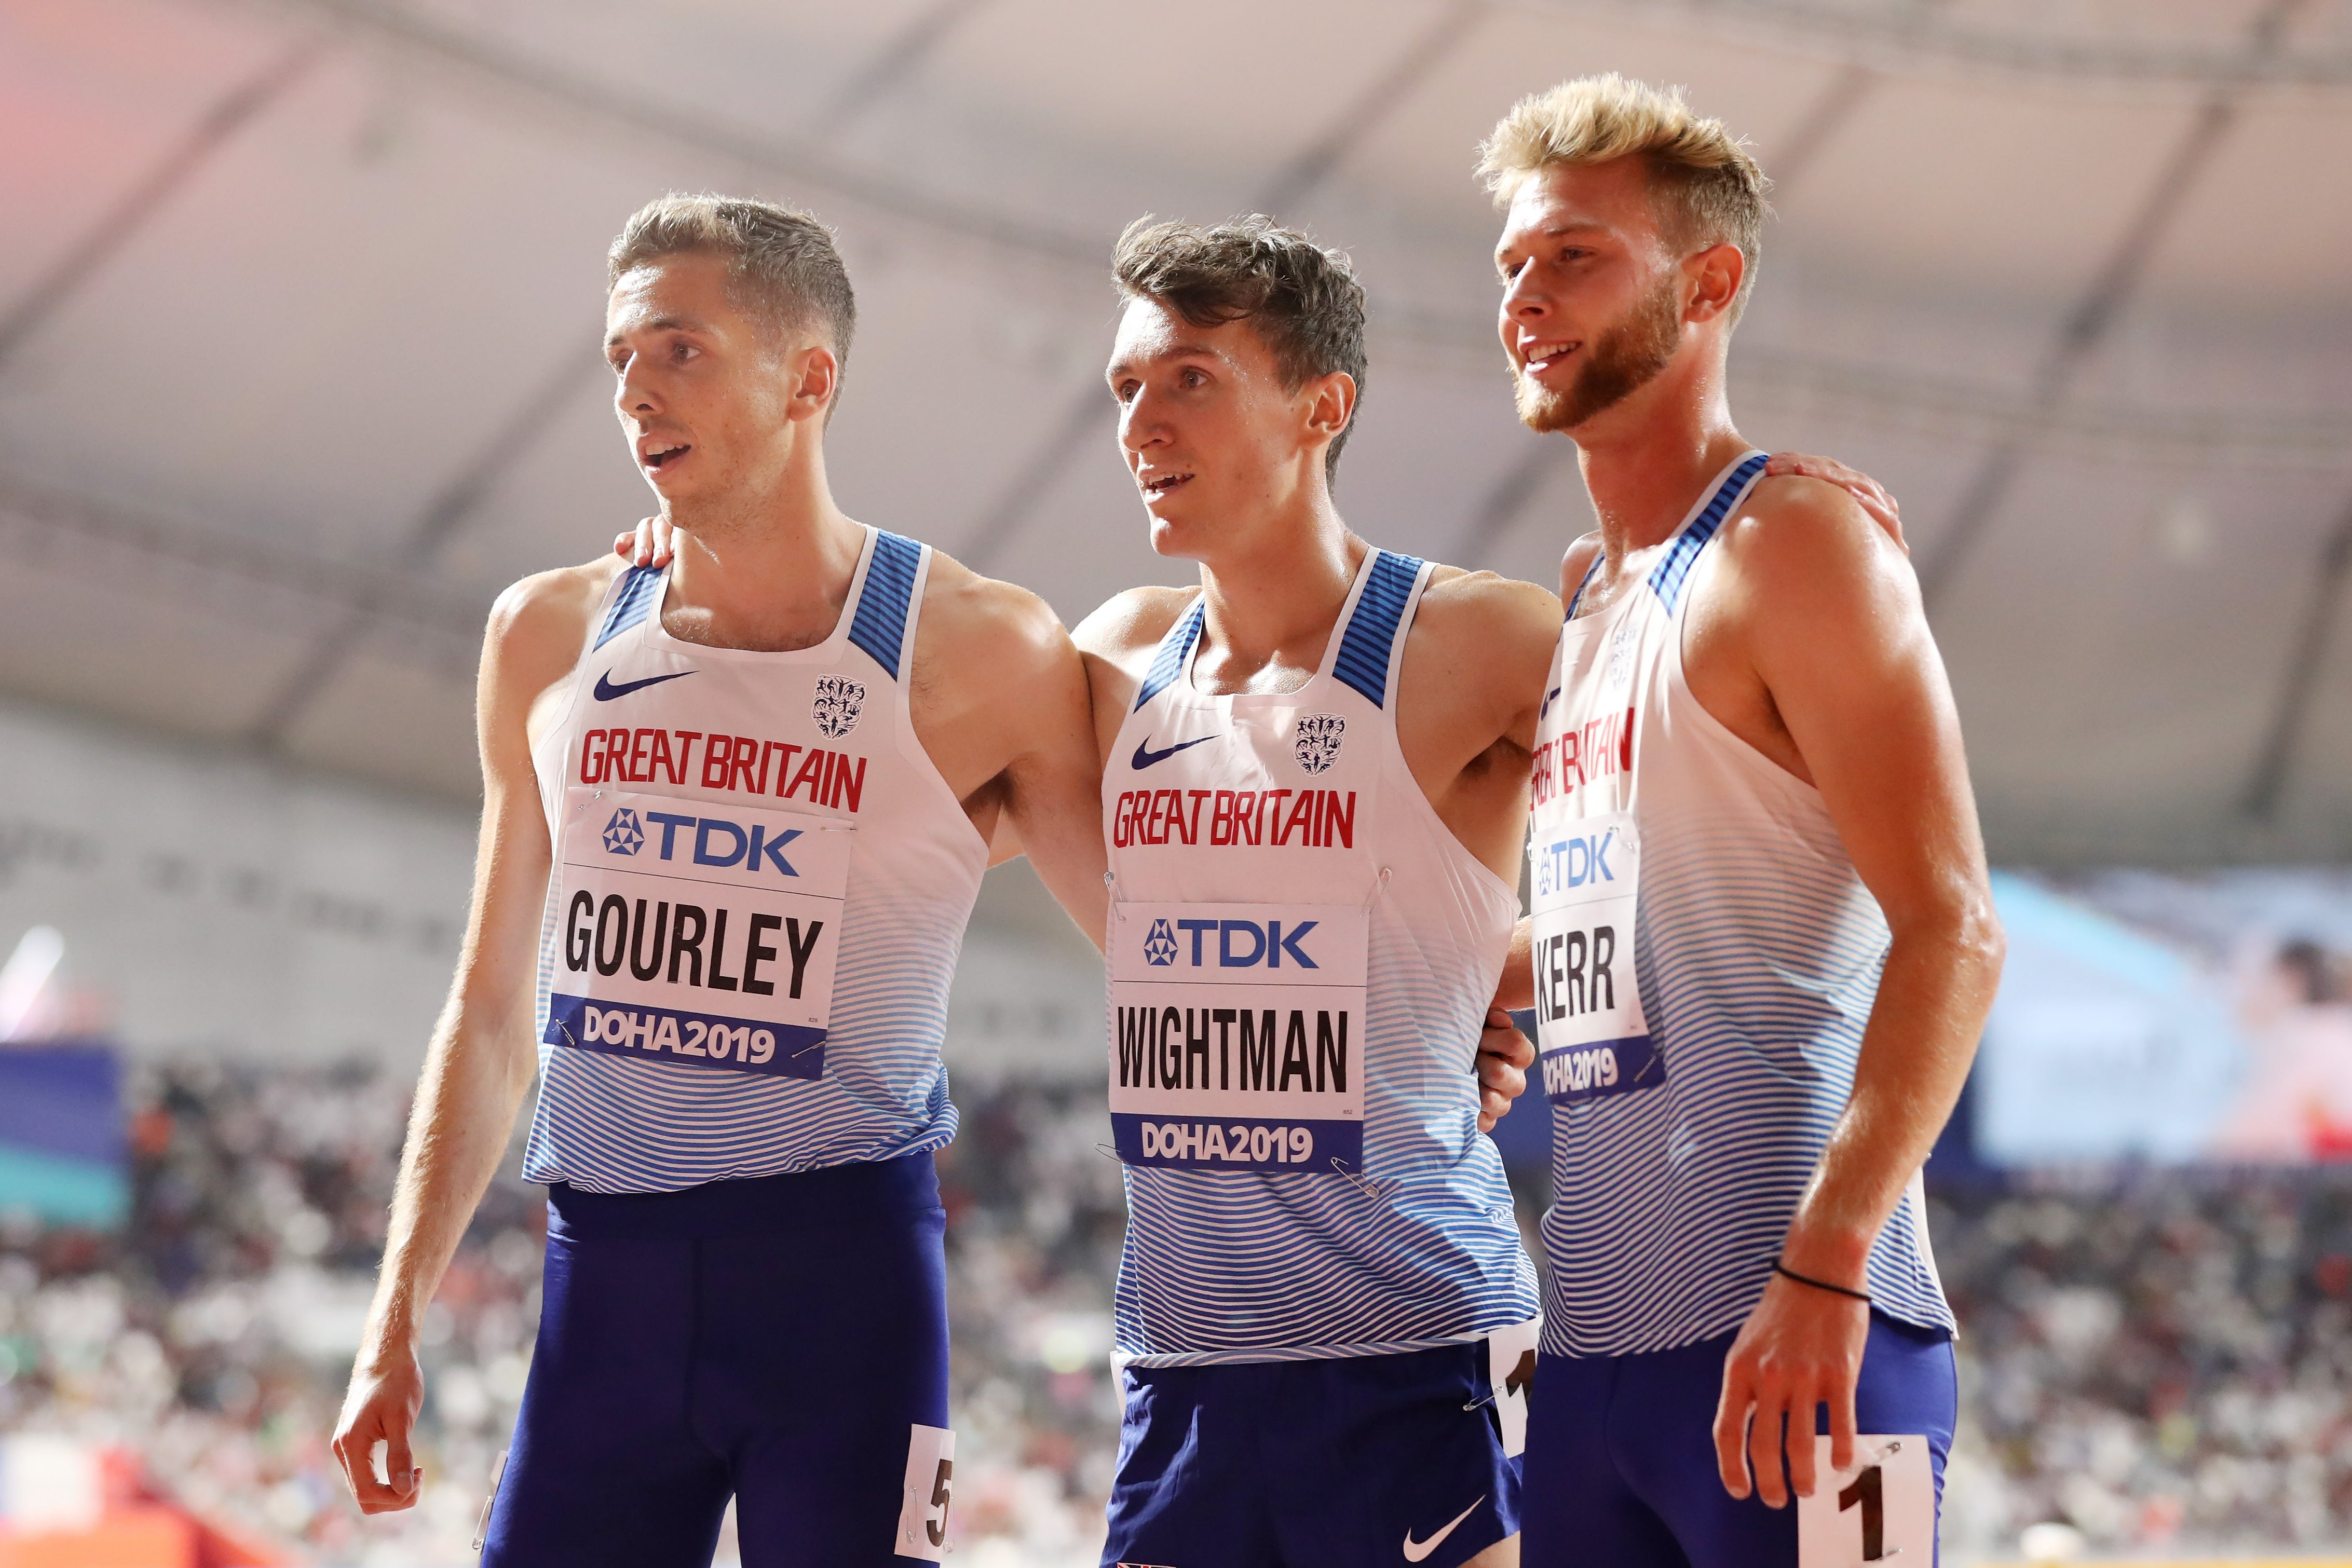 Josh Kerr has guaranteed British medals in the men’s 1500m at the Paris Olympics